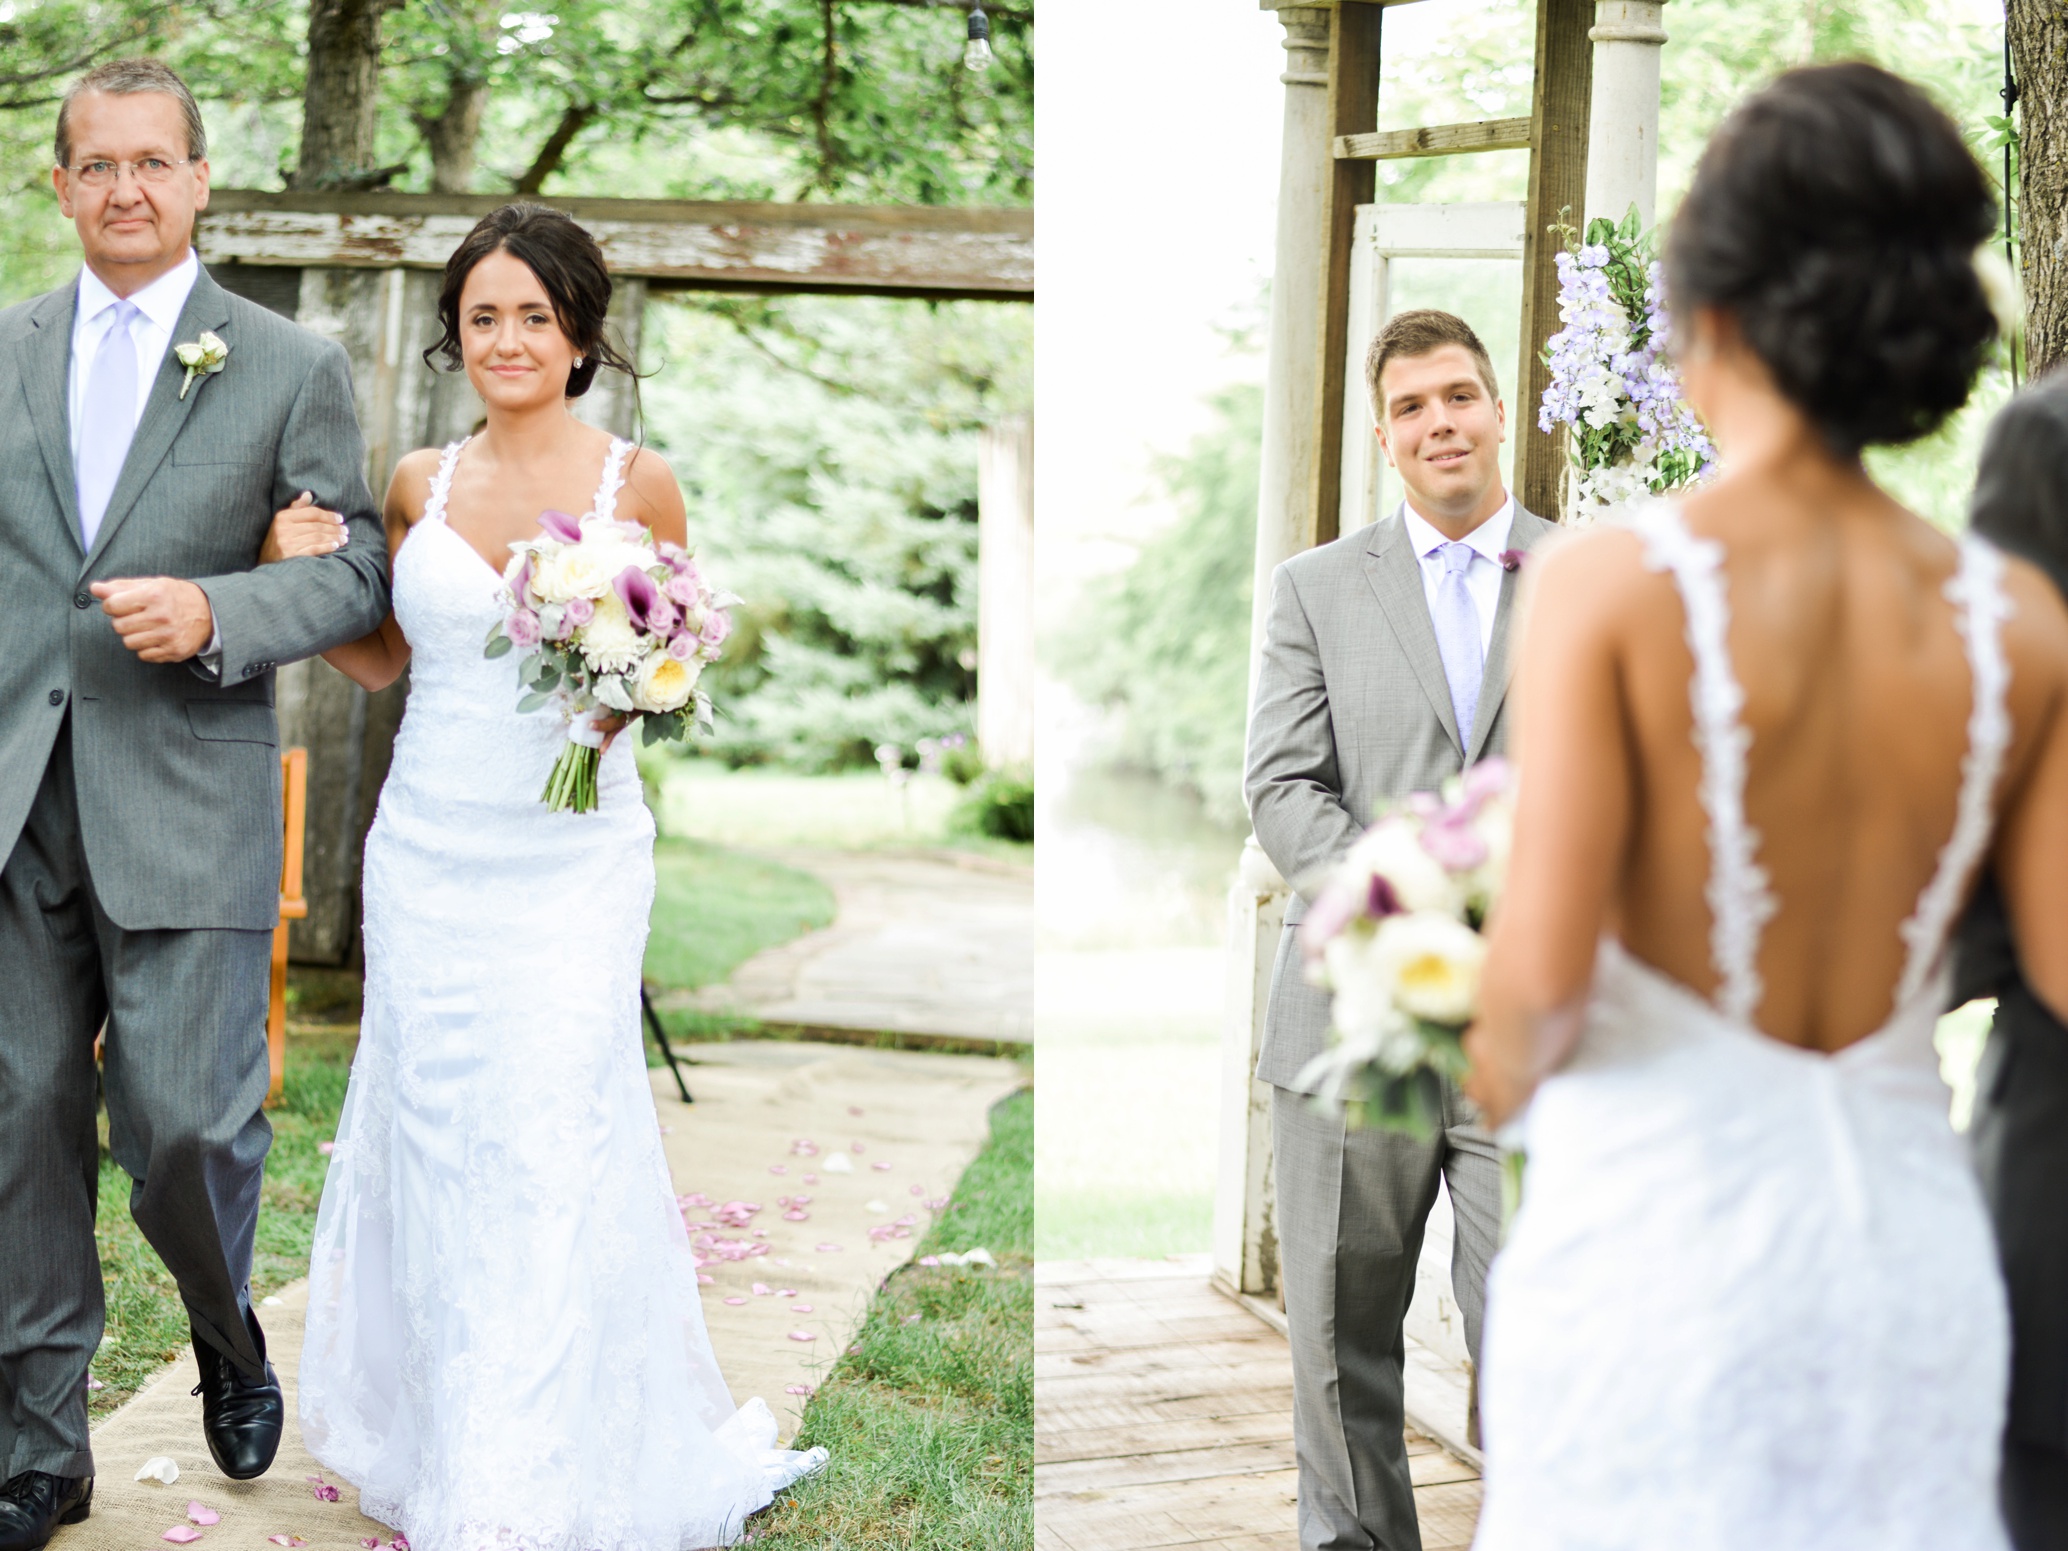 Barnes' Place Rustic Outdoor Wedding | Ali Leigh Photo Minneapolis Wedding Photographer_0112.jpg